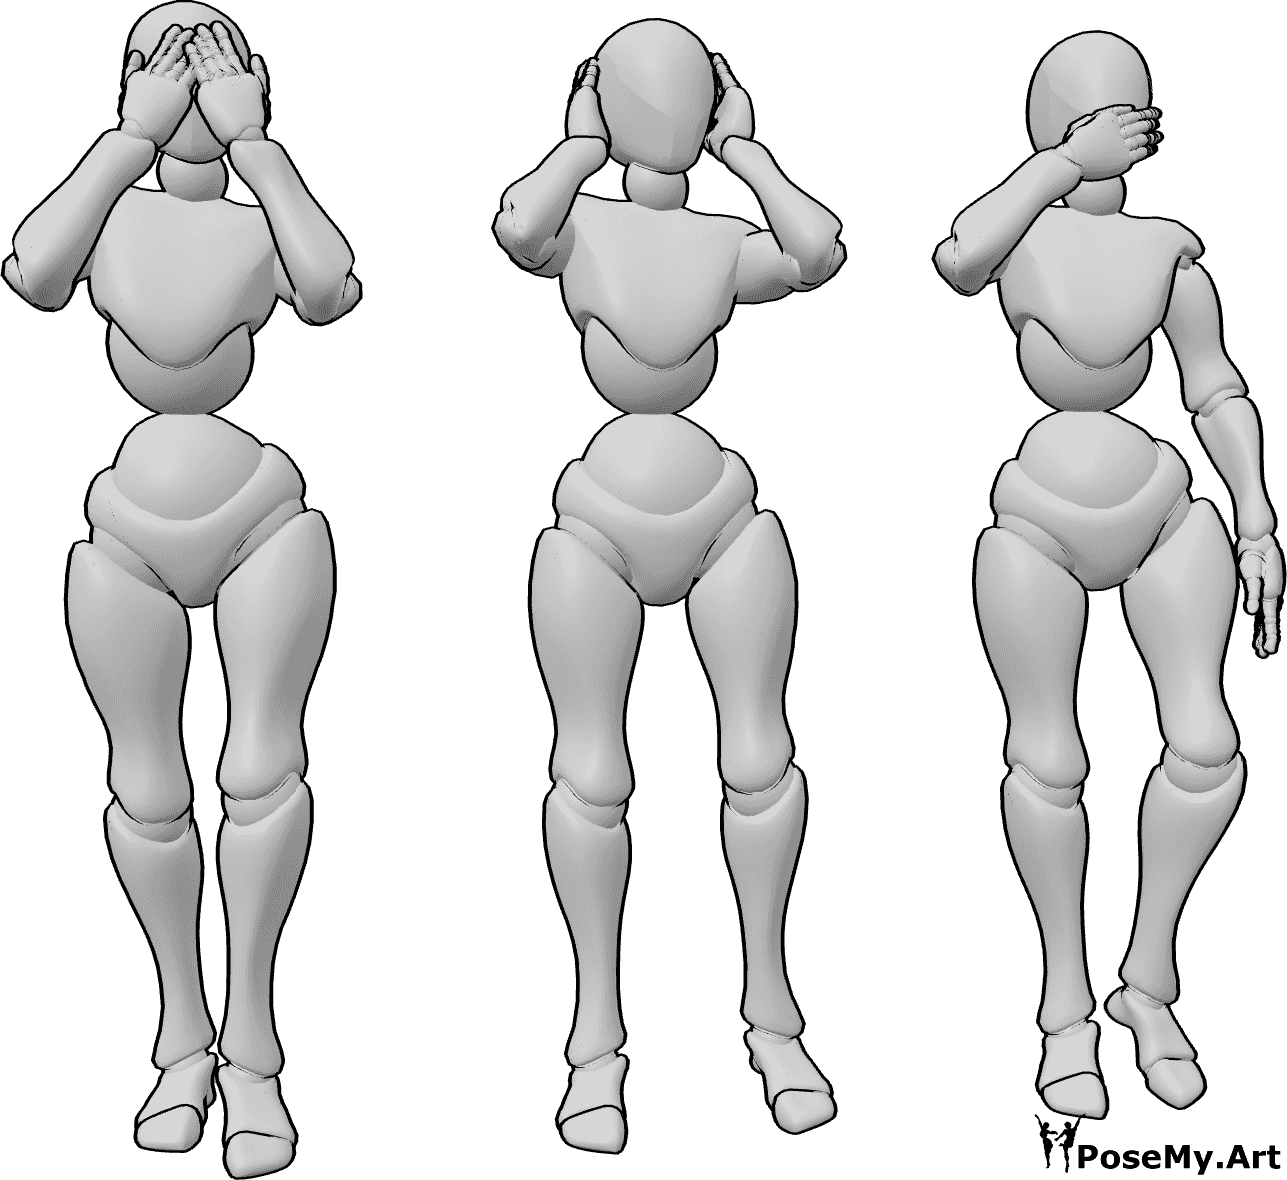 Body Poses - Three females standing pose